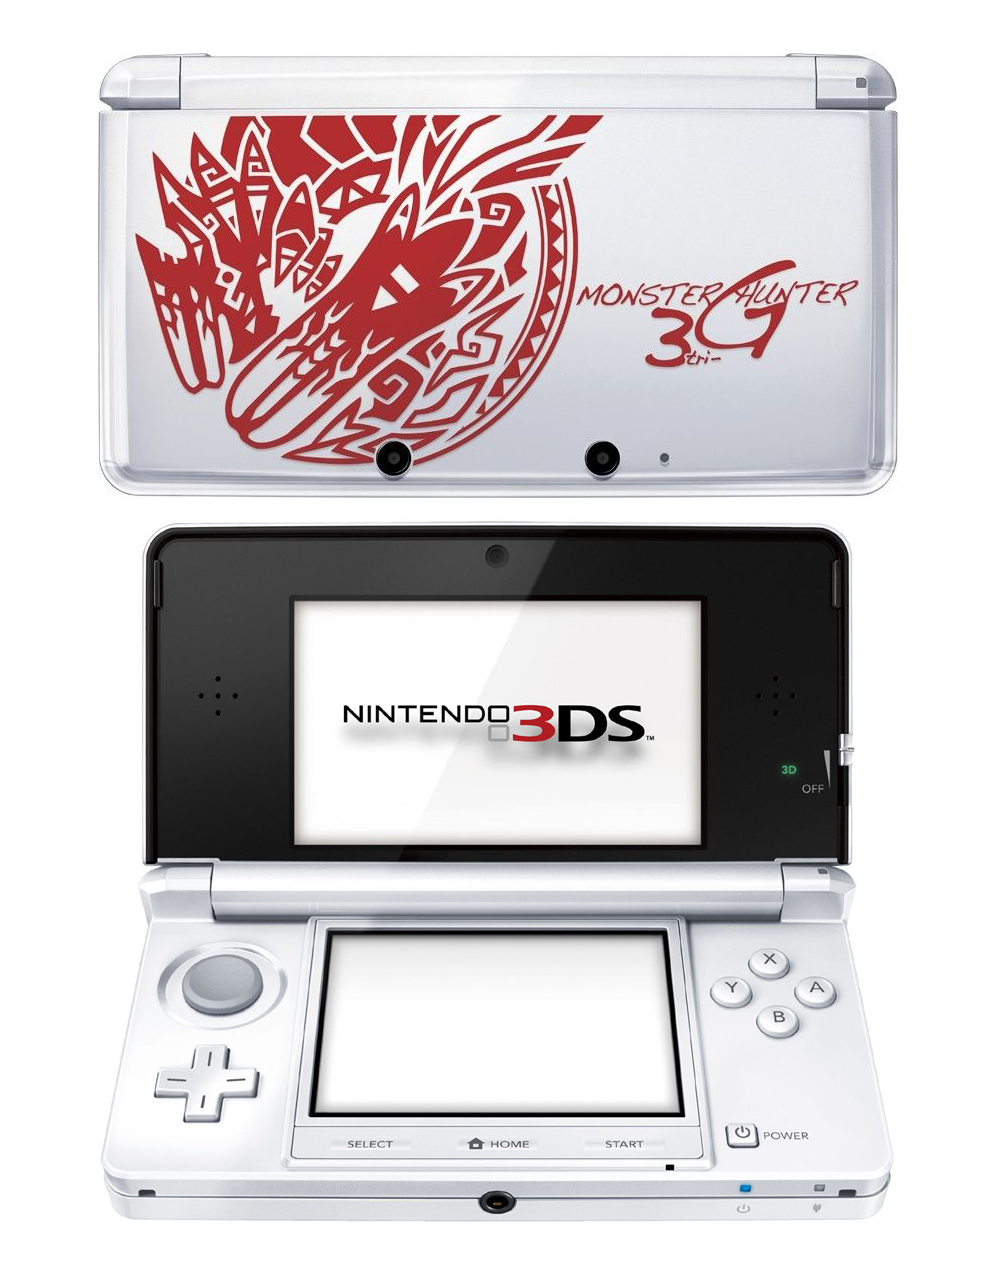  Nintendo 3DS Monster Hunter 3G Console